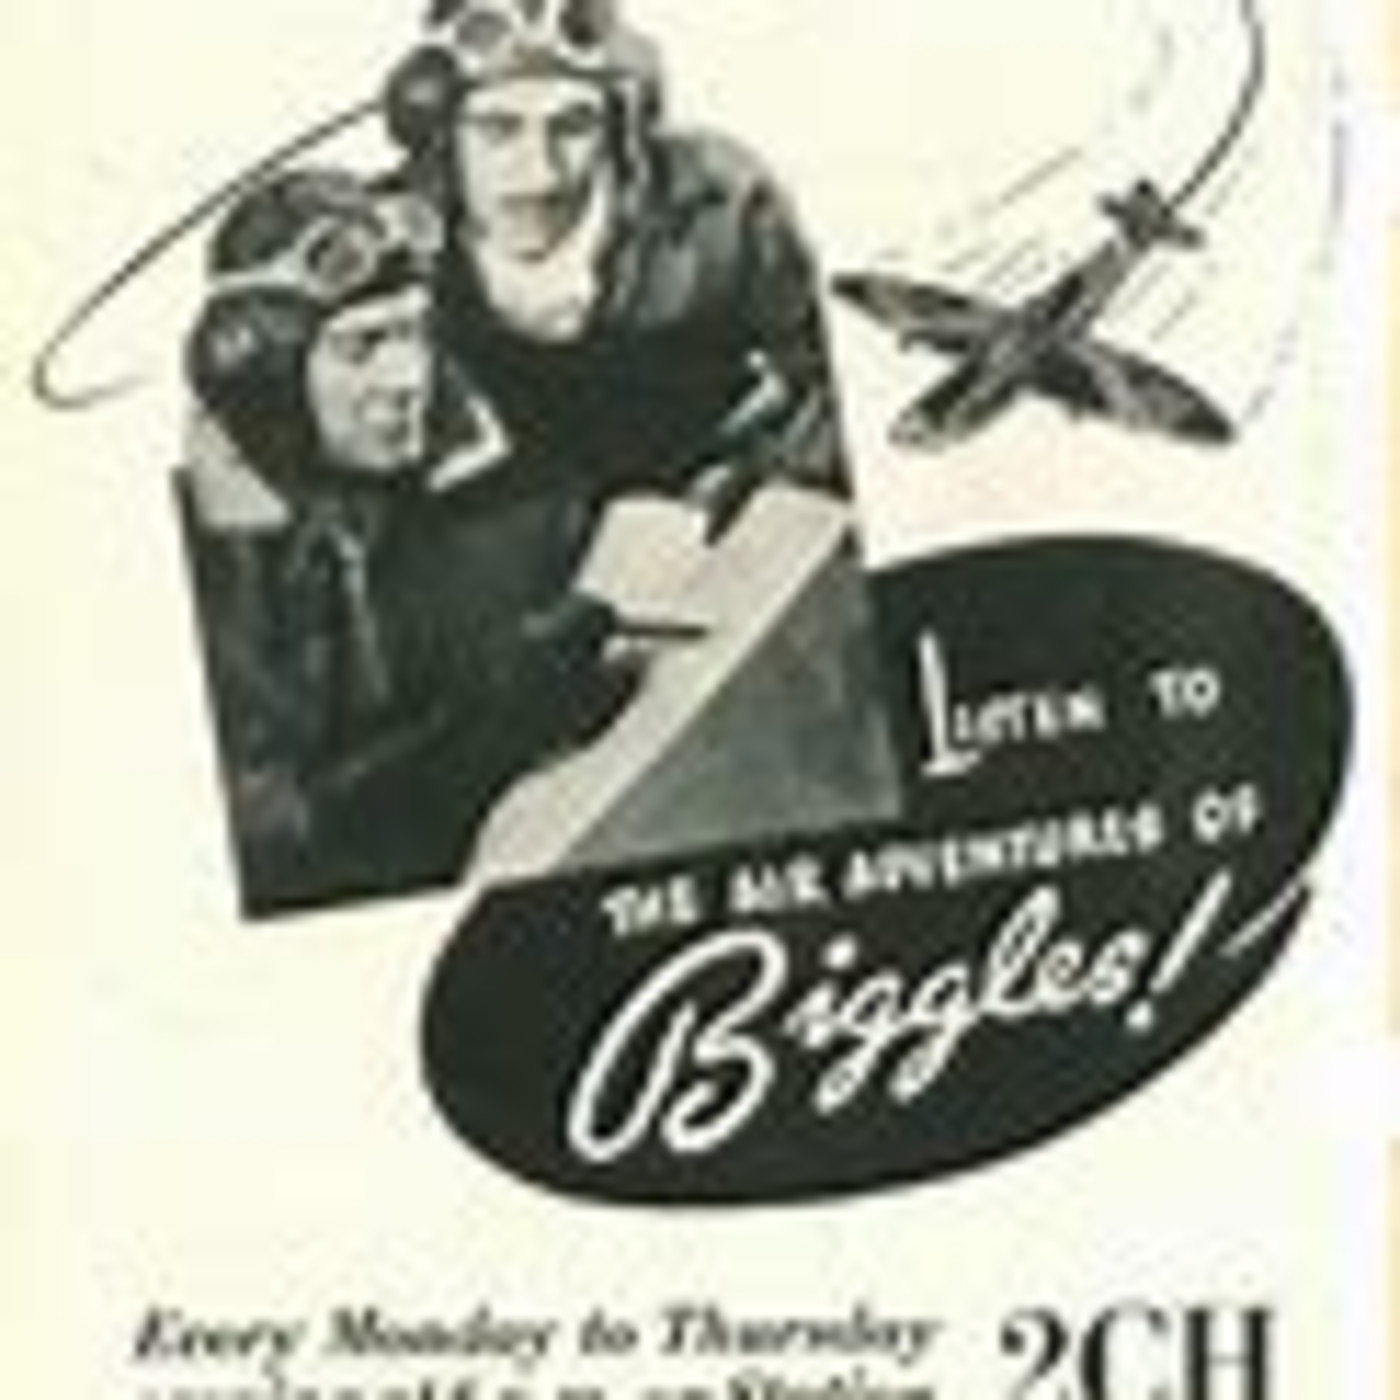 Air Adventures of Biggles xx-xx-xx International Brigade (32)